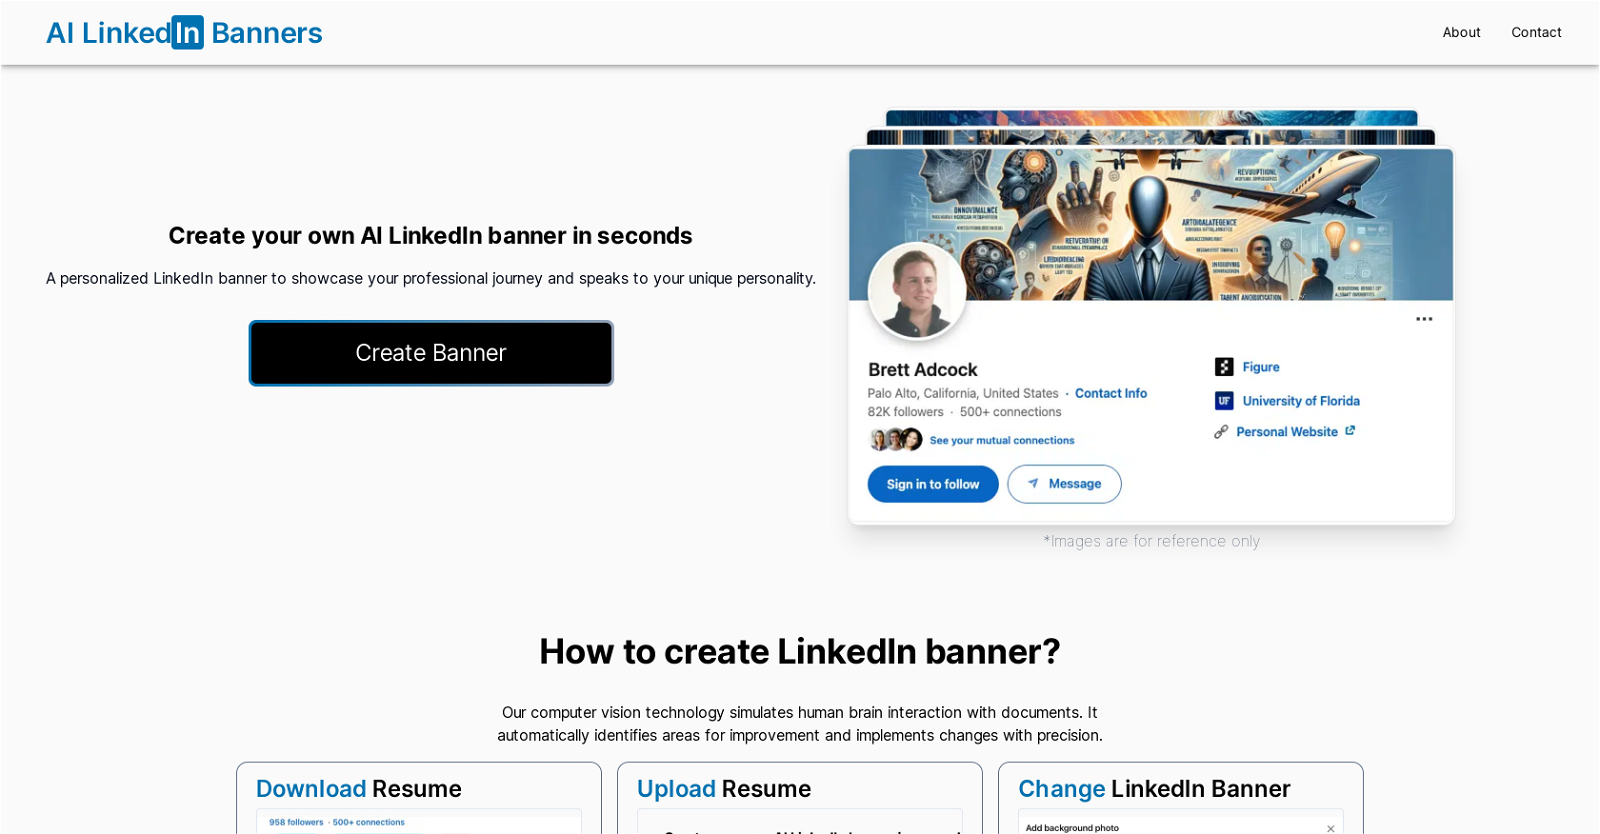 AI LinkedIn Banners website